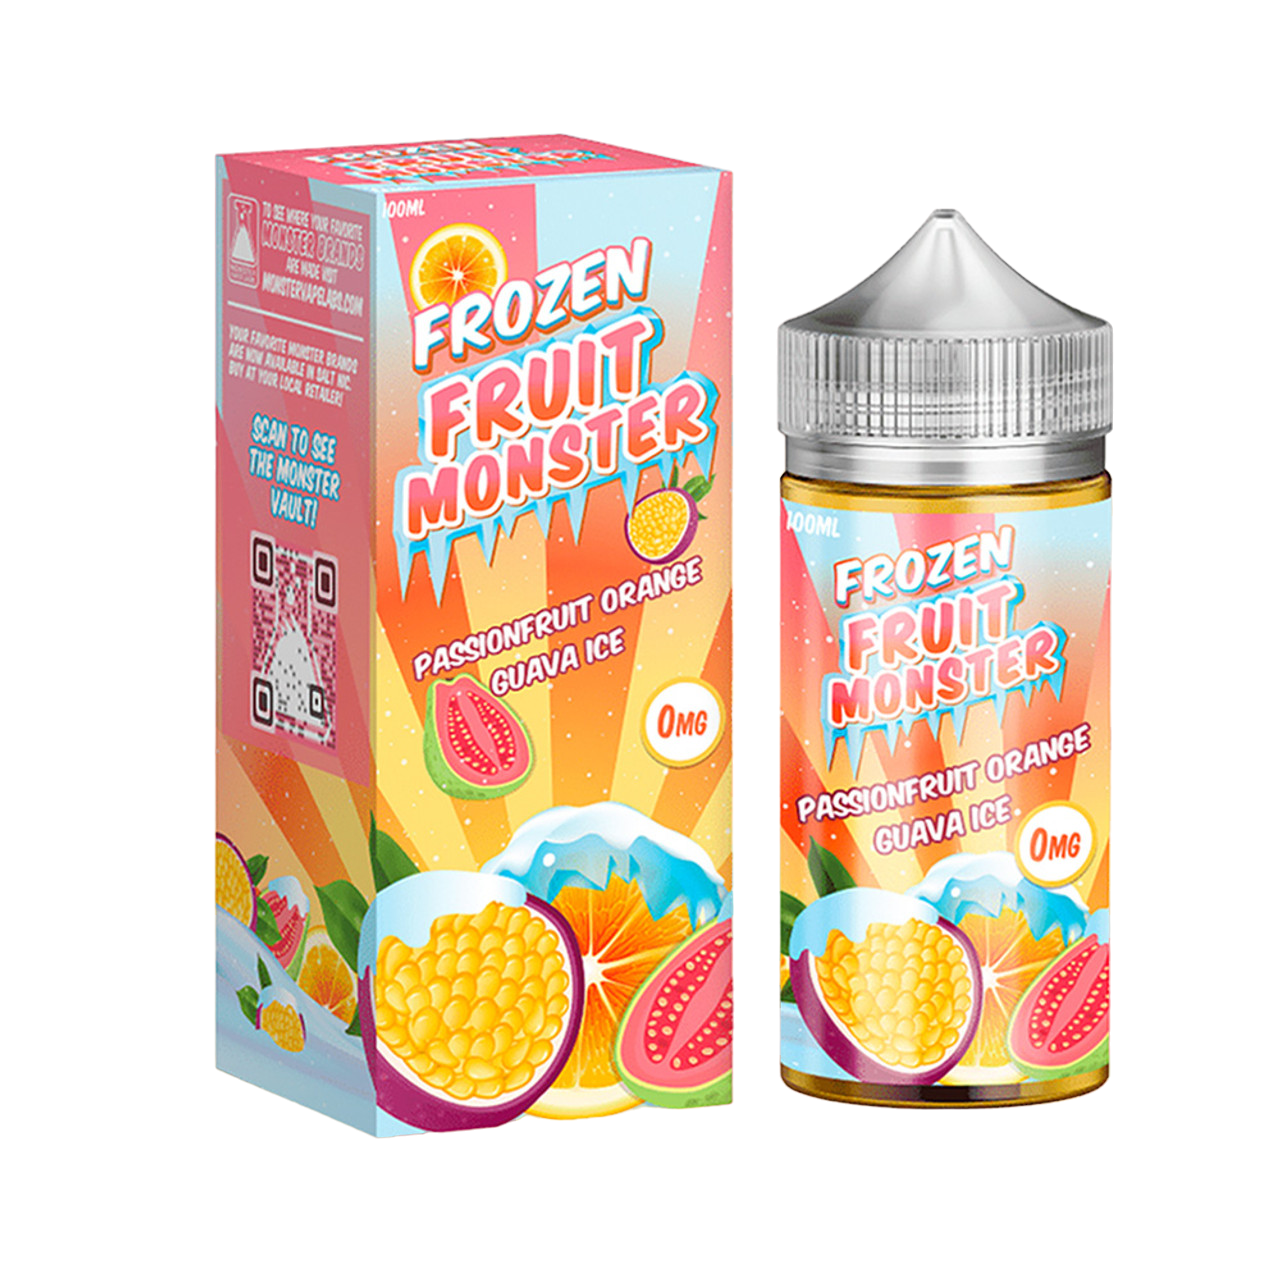 Frozen Fruit Monster Synthetic Nicotine E-Liquid 100ML - Passionfruit Orange Guava Ice 